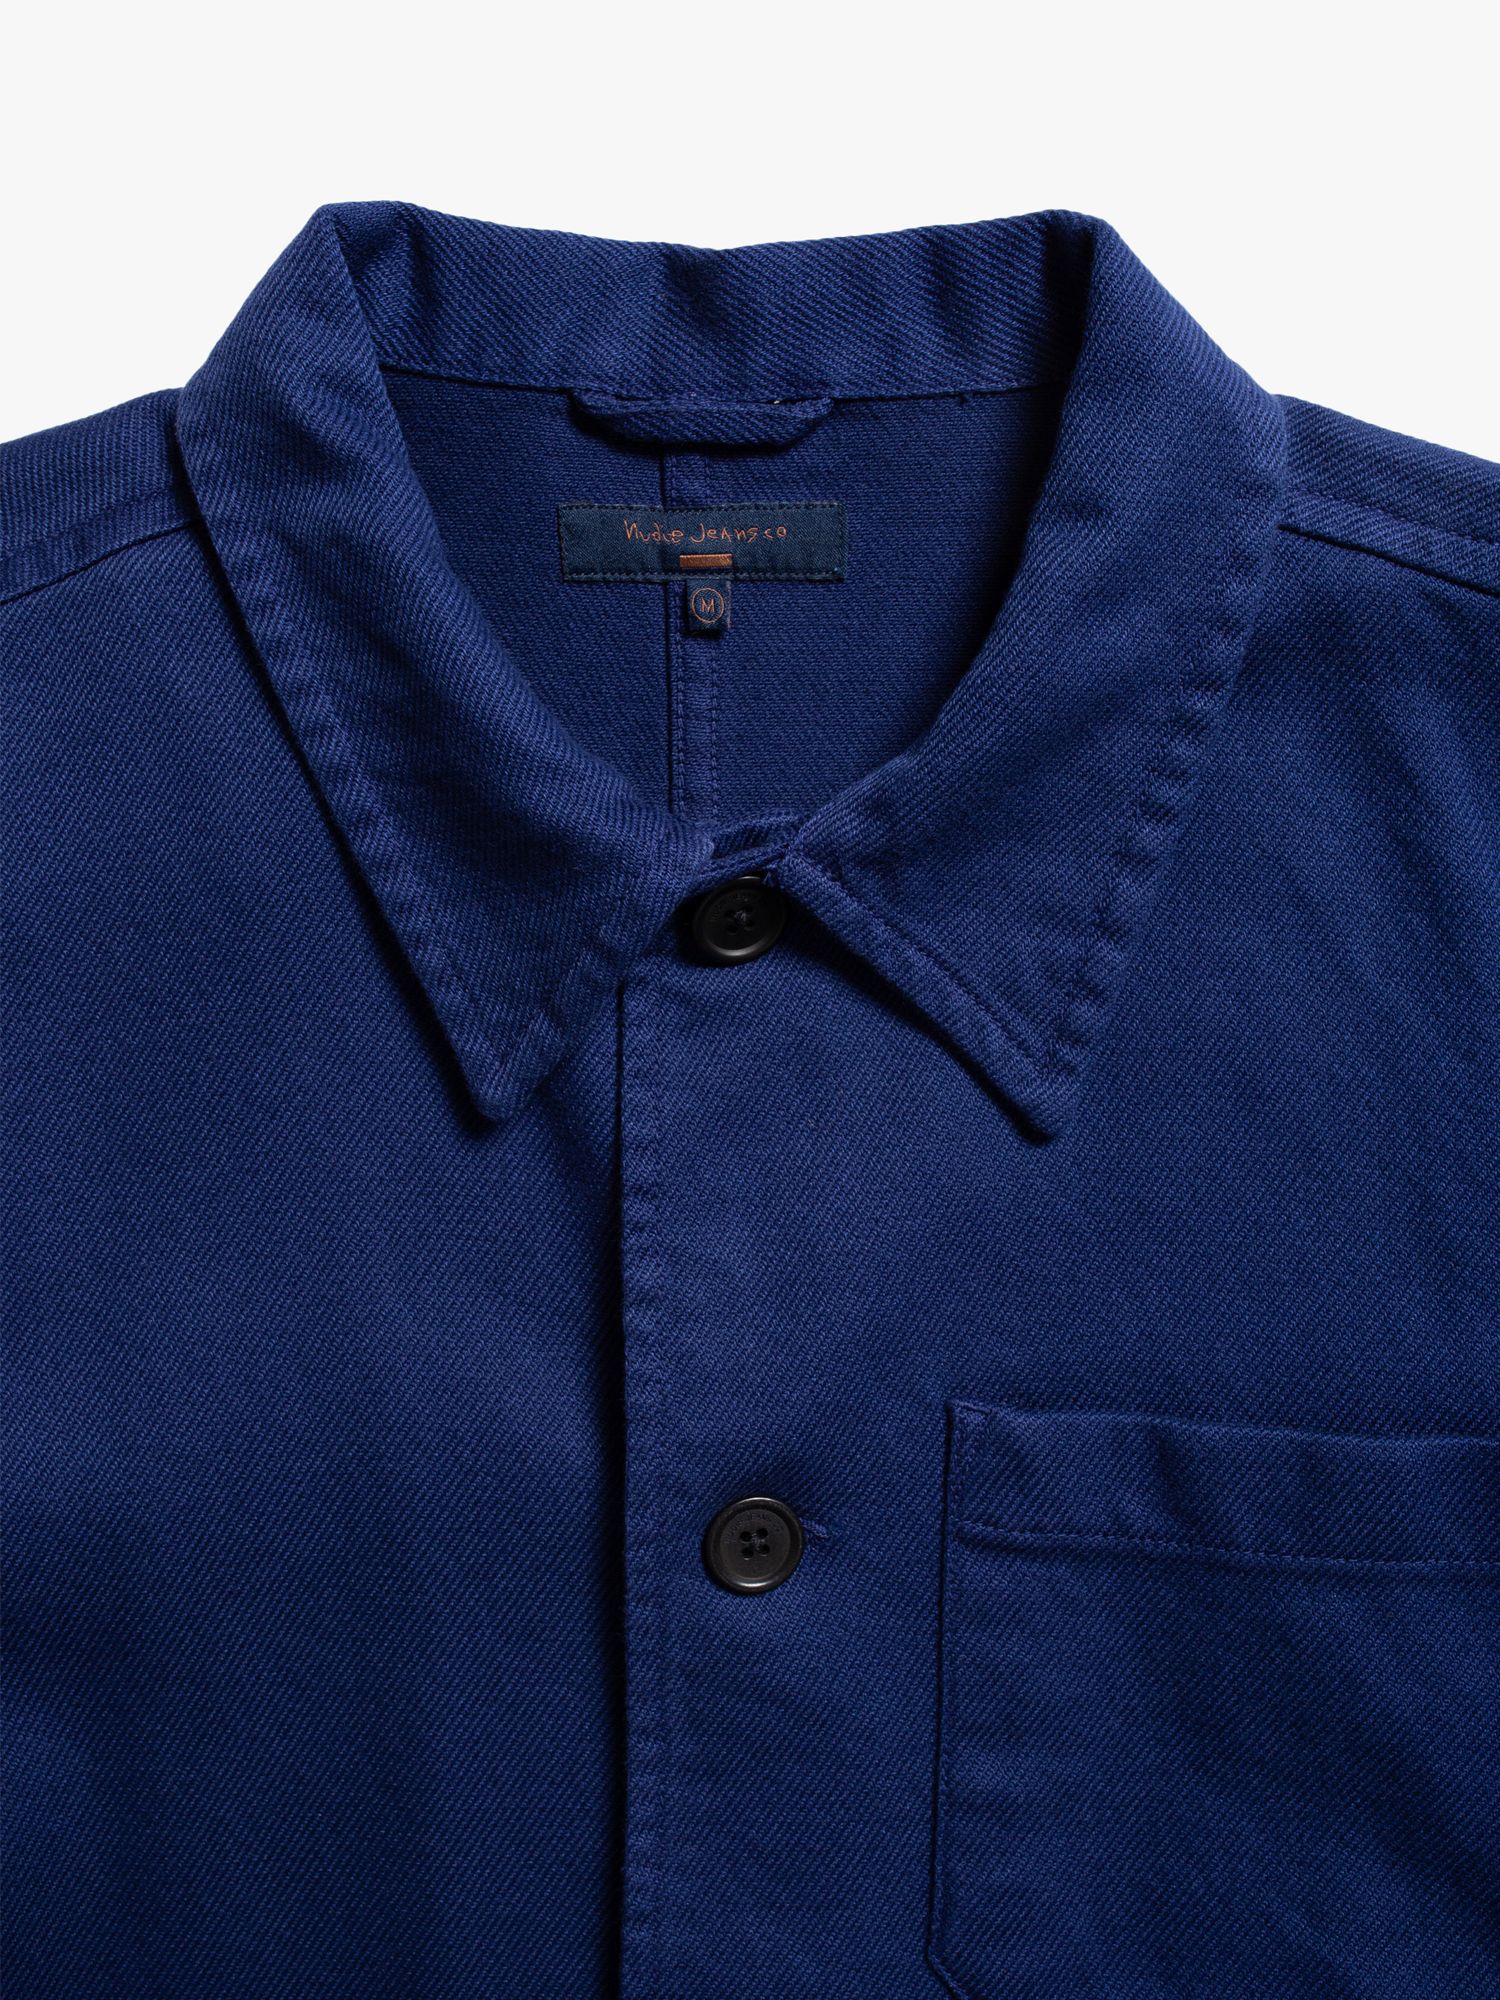 Nudie Jeans Barney Worker Jacket, Mid Blue, XS